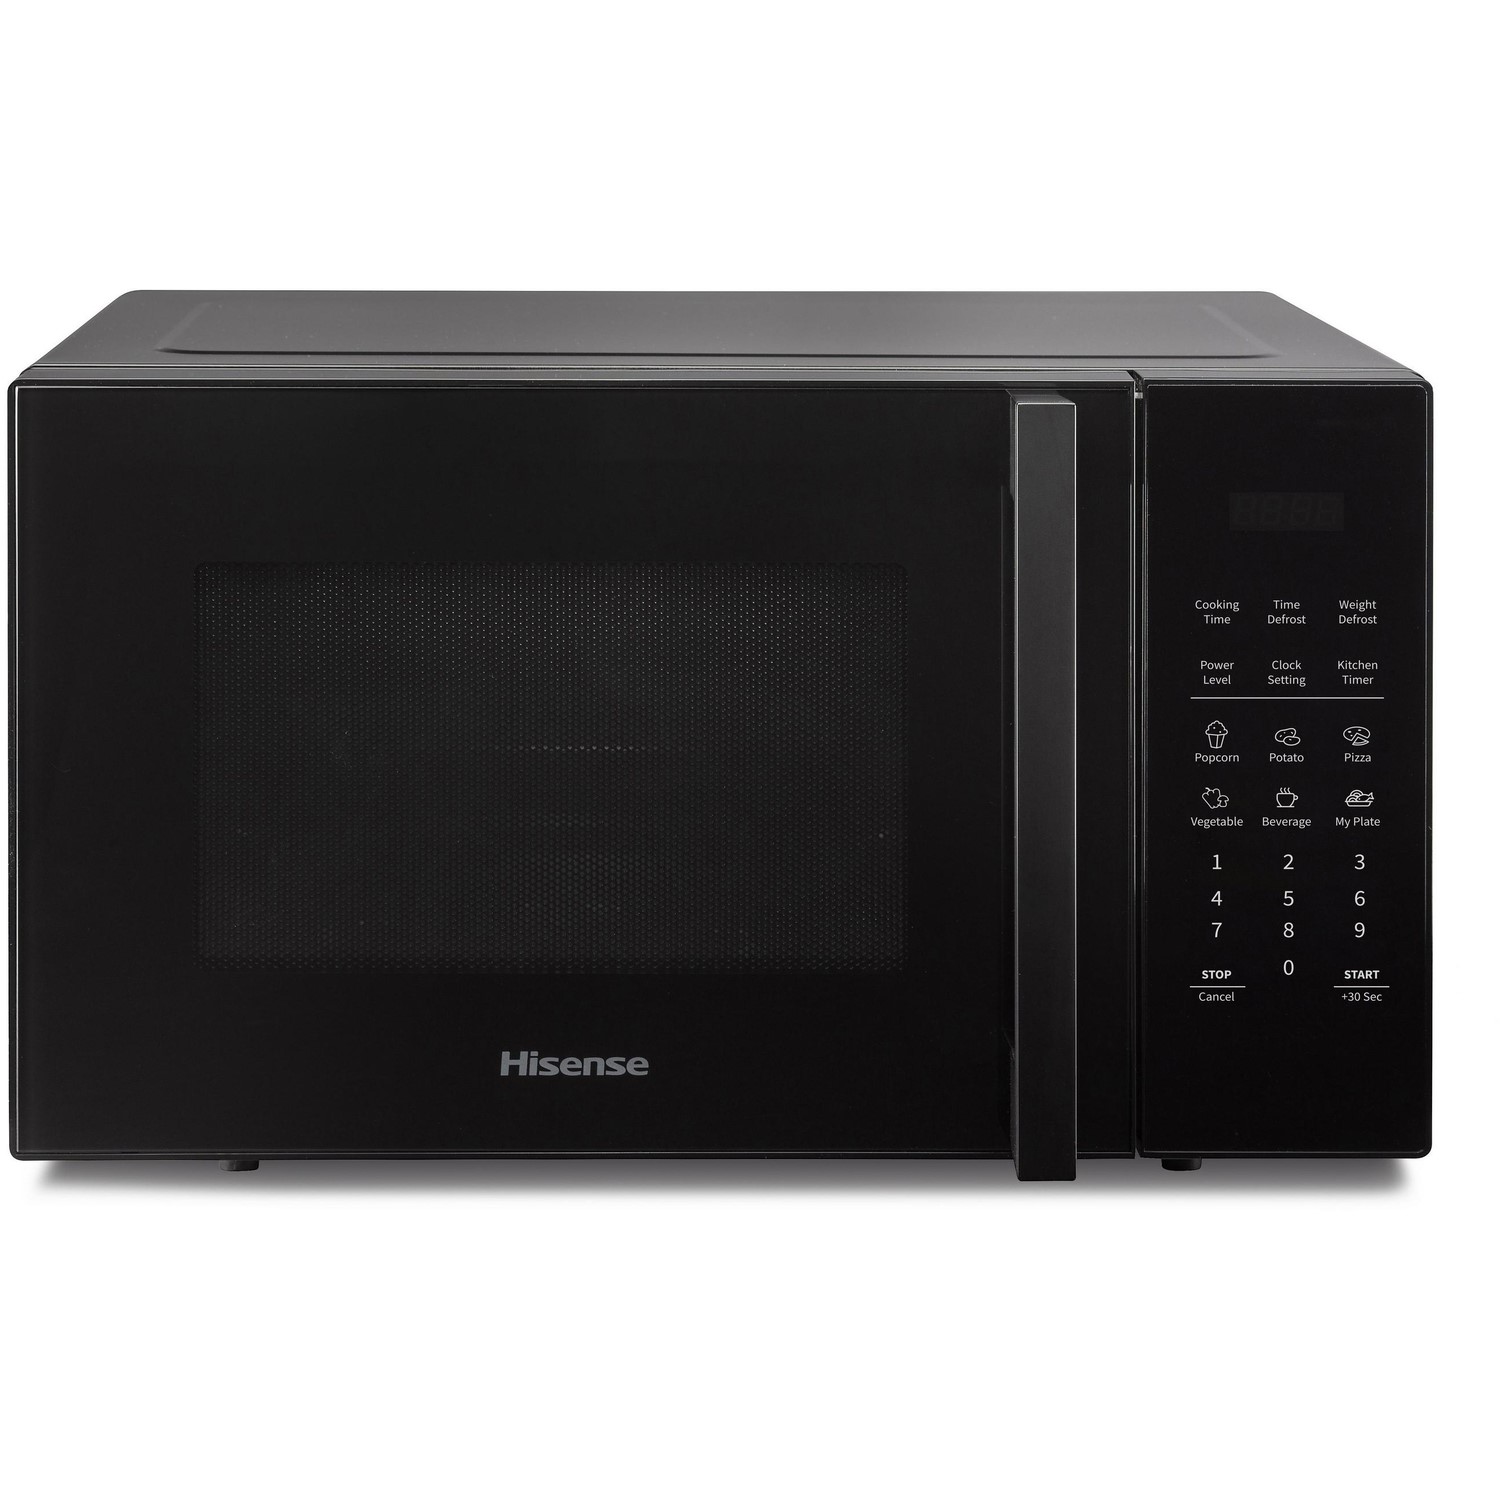 Hisense 25L Digital Microwave Oven - Black